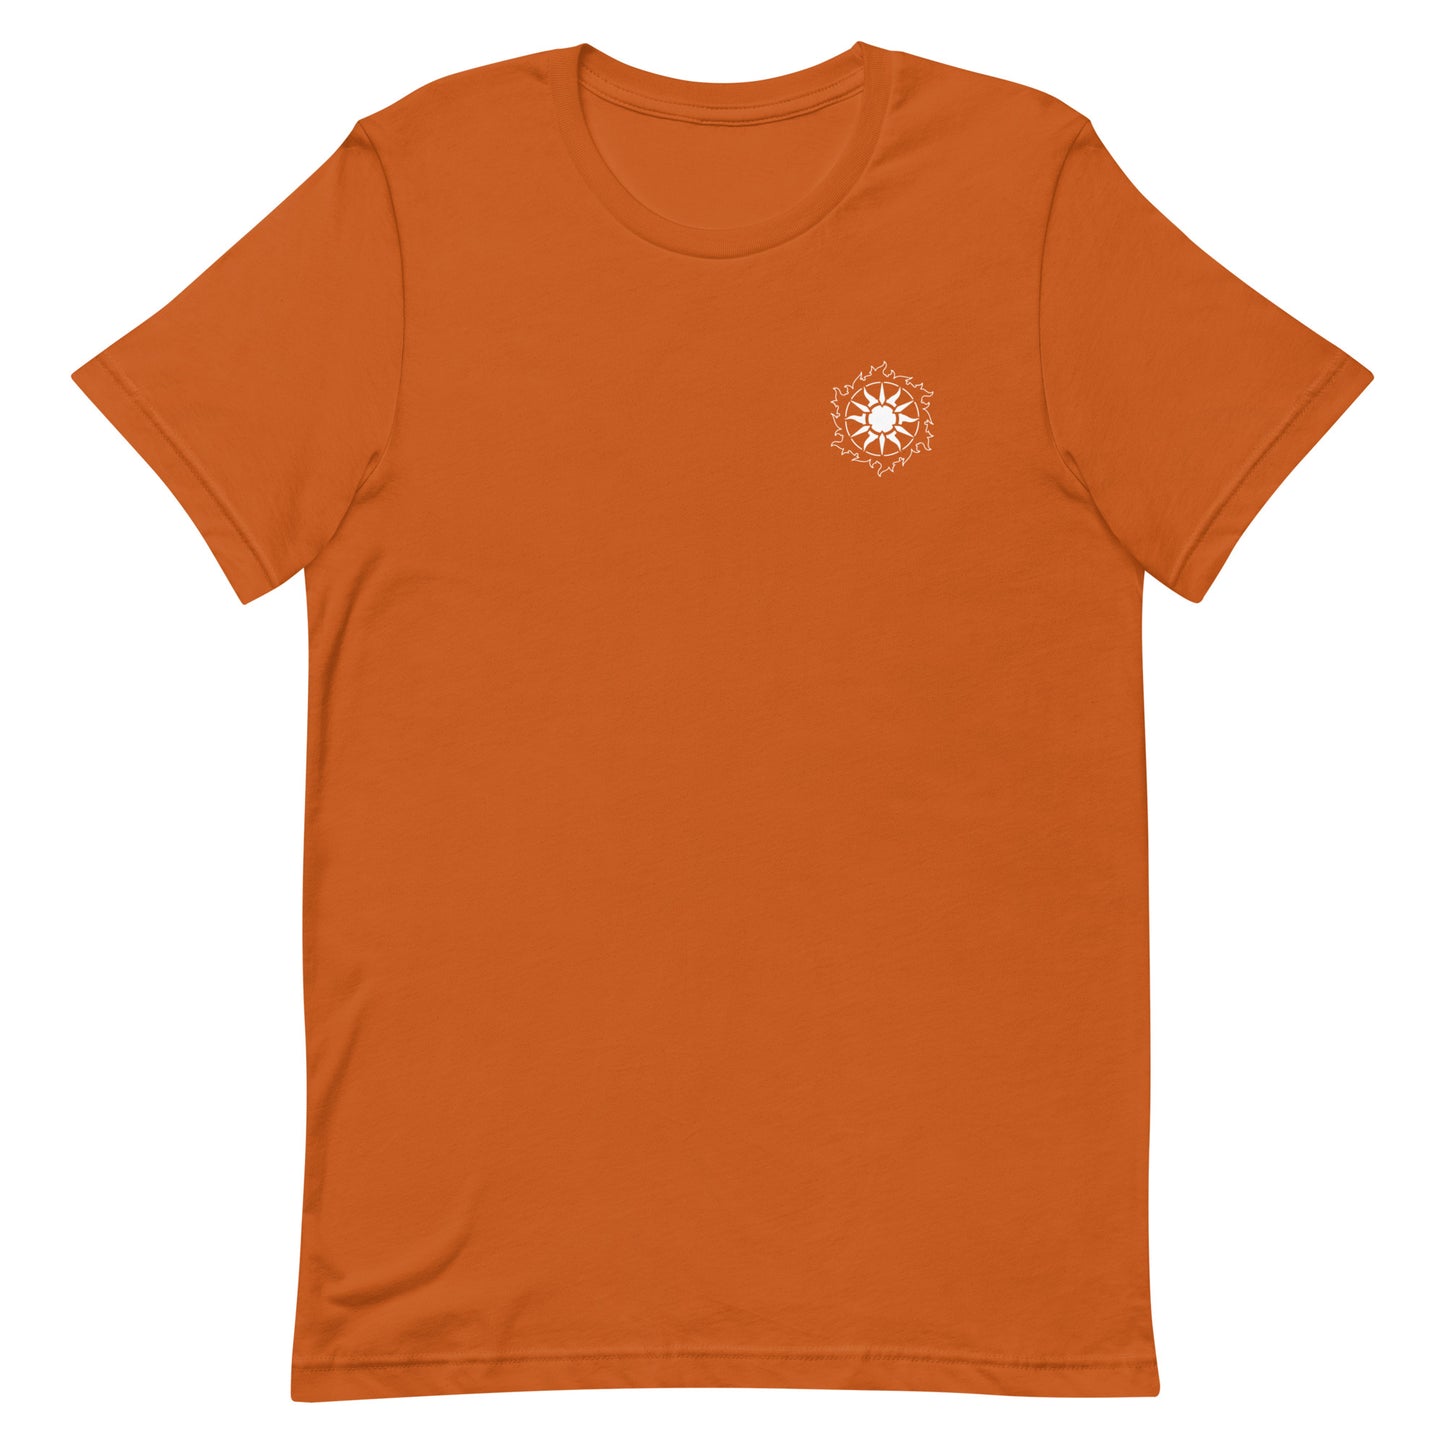 Jadd Empire Sun, Printed - Sigil Attire - Unisex T-shirt